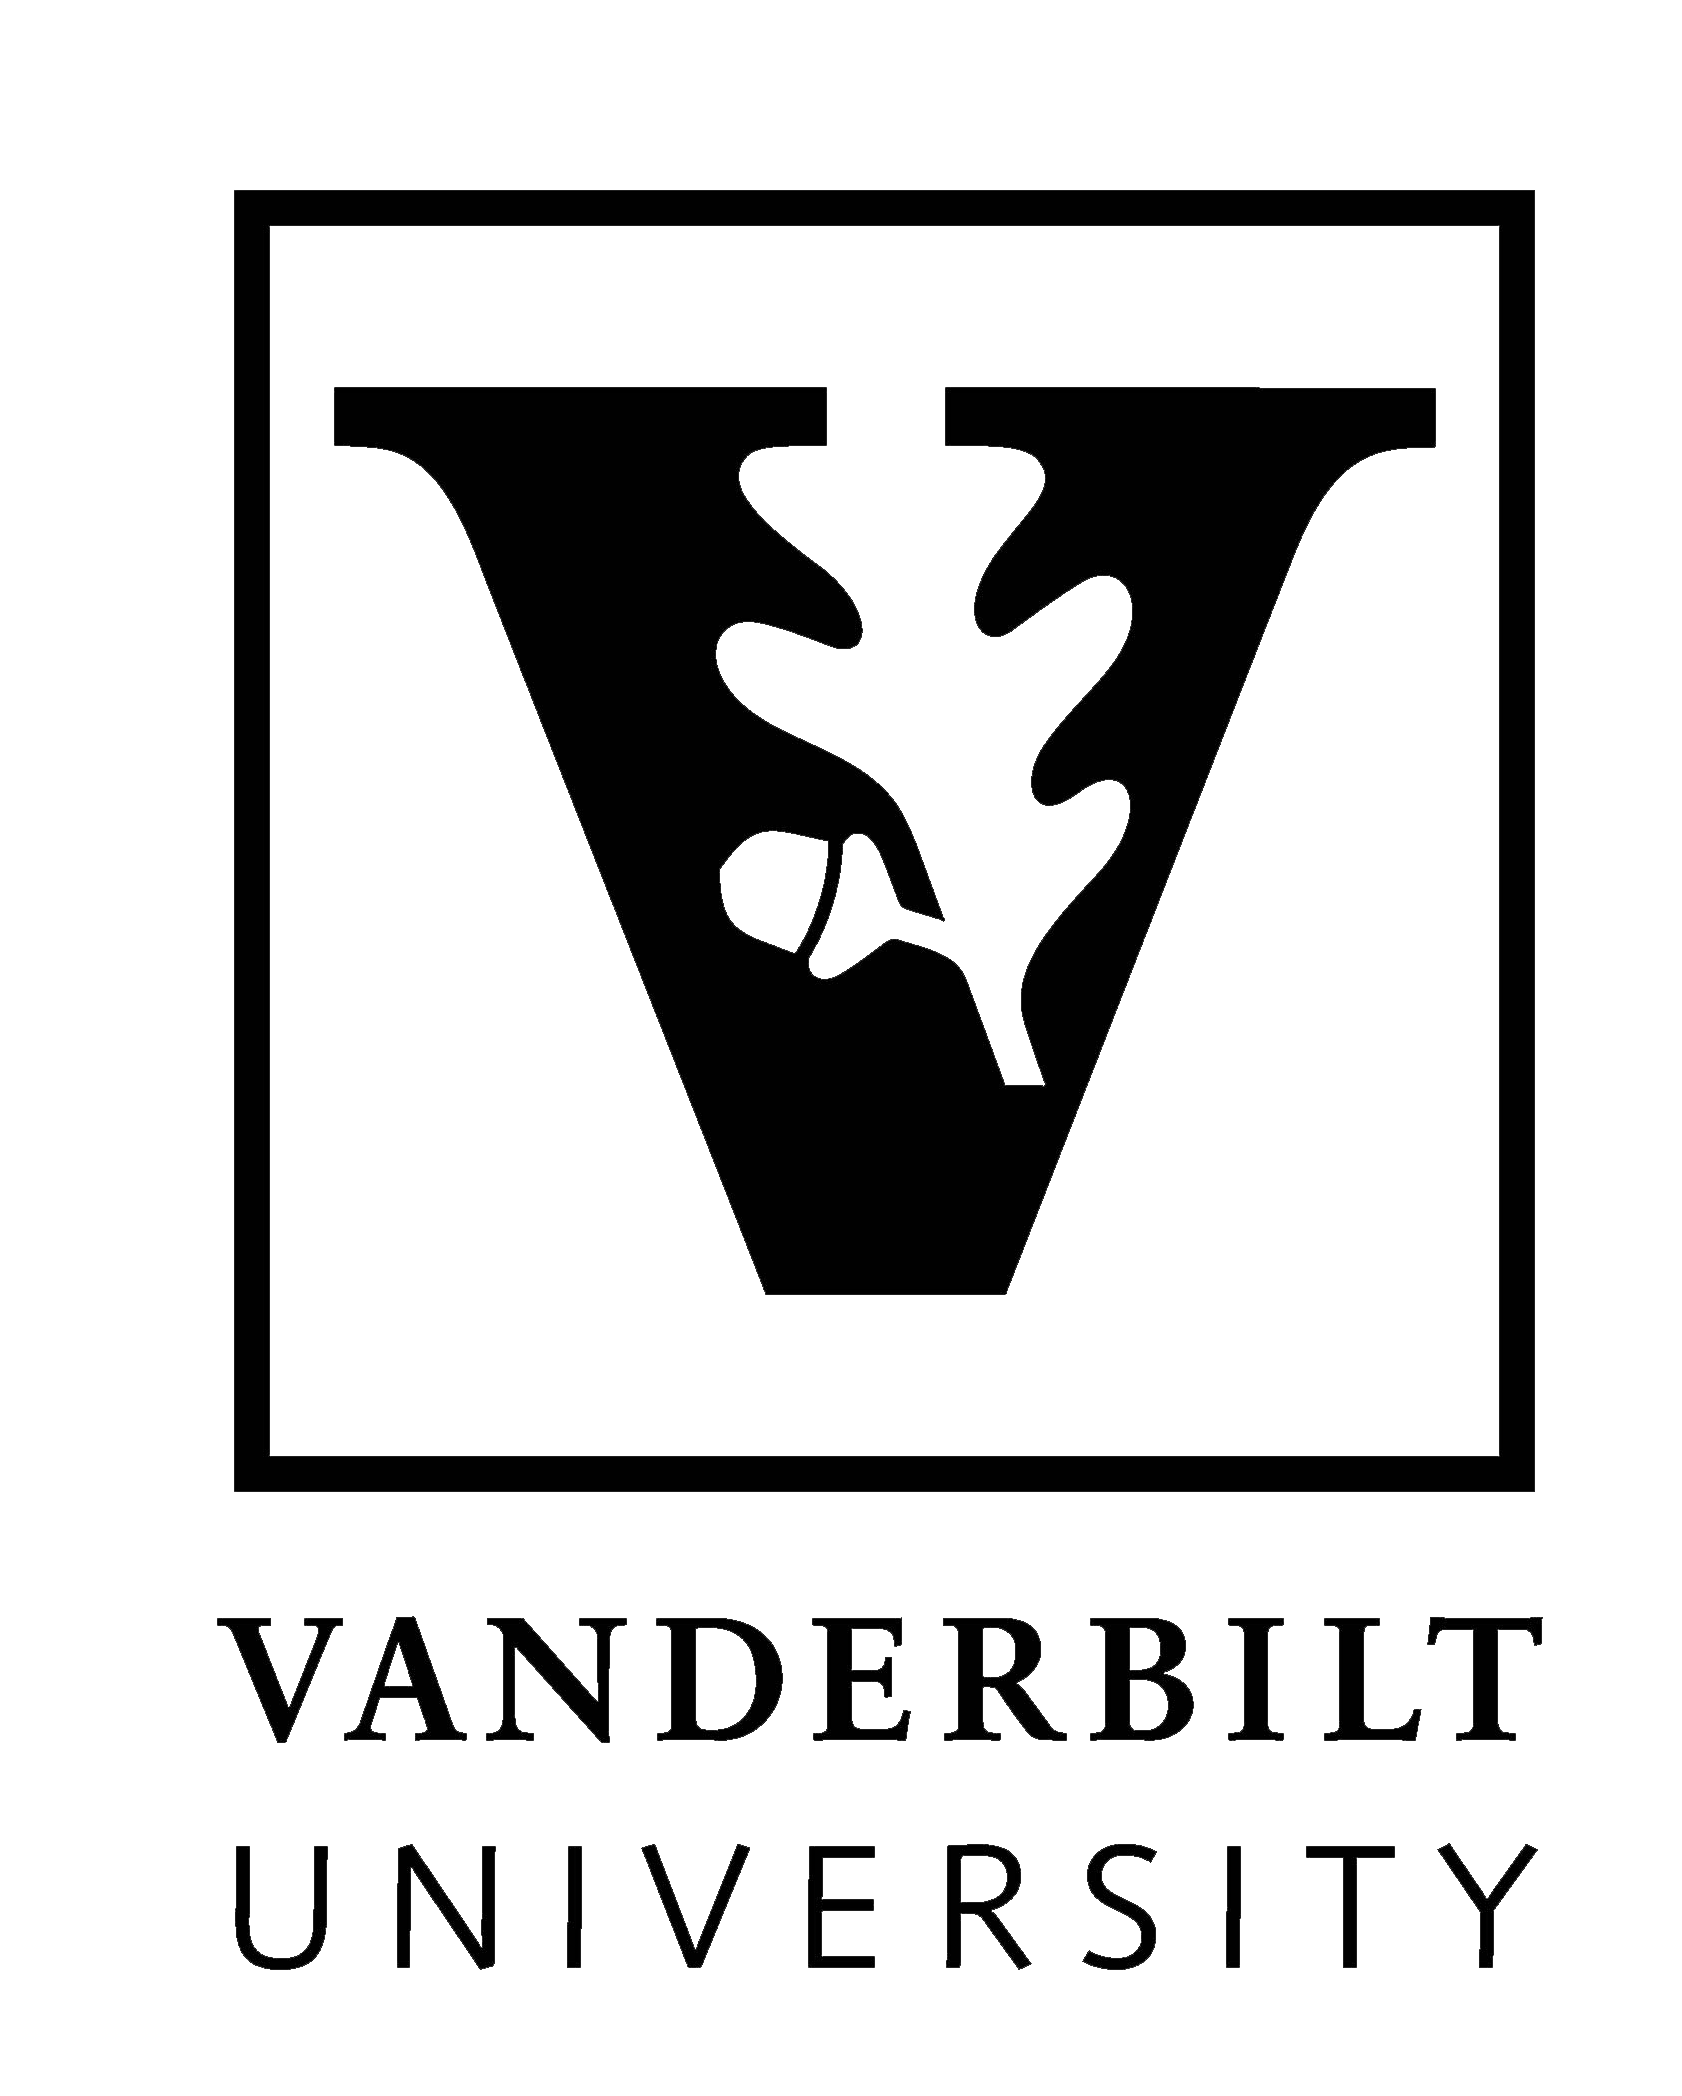 literature Vanderbilt logo